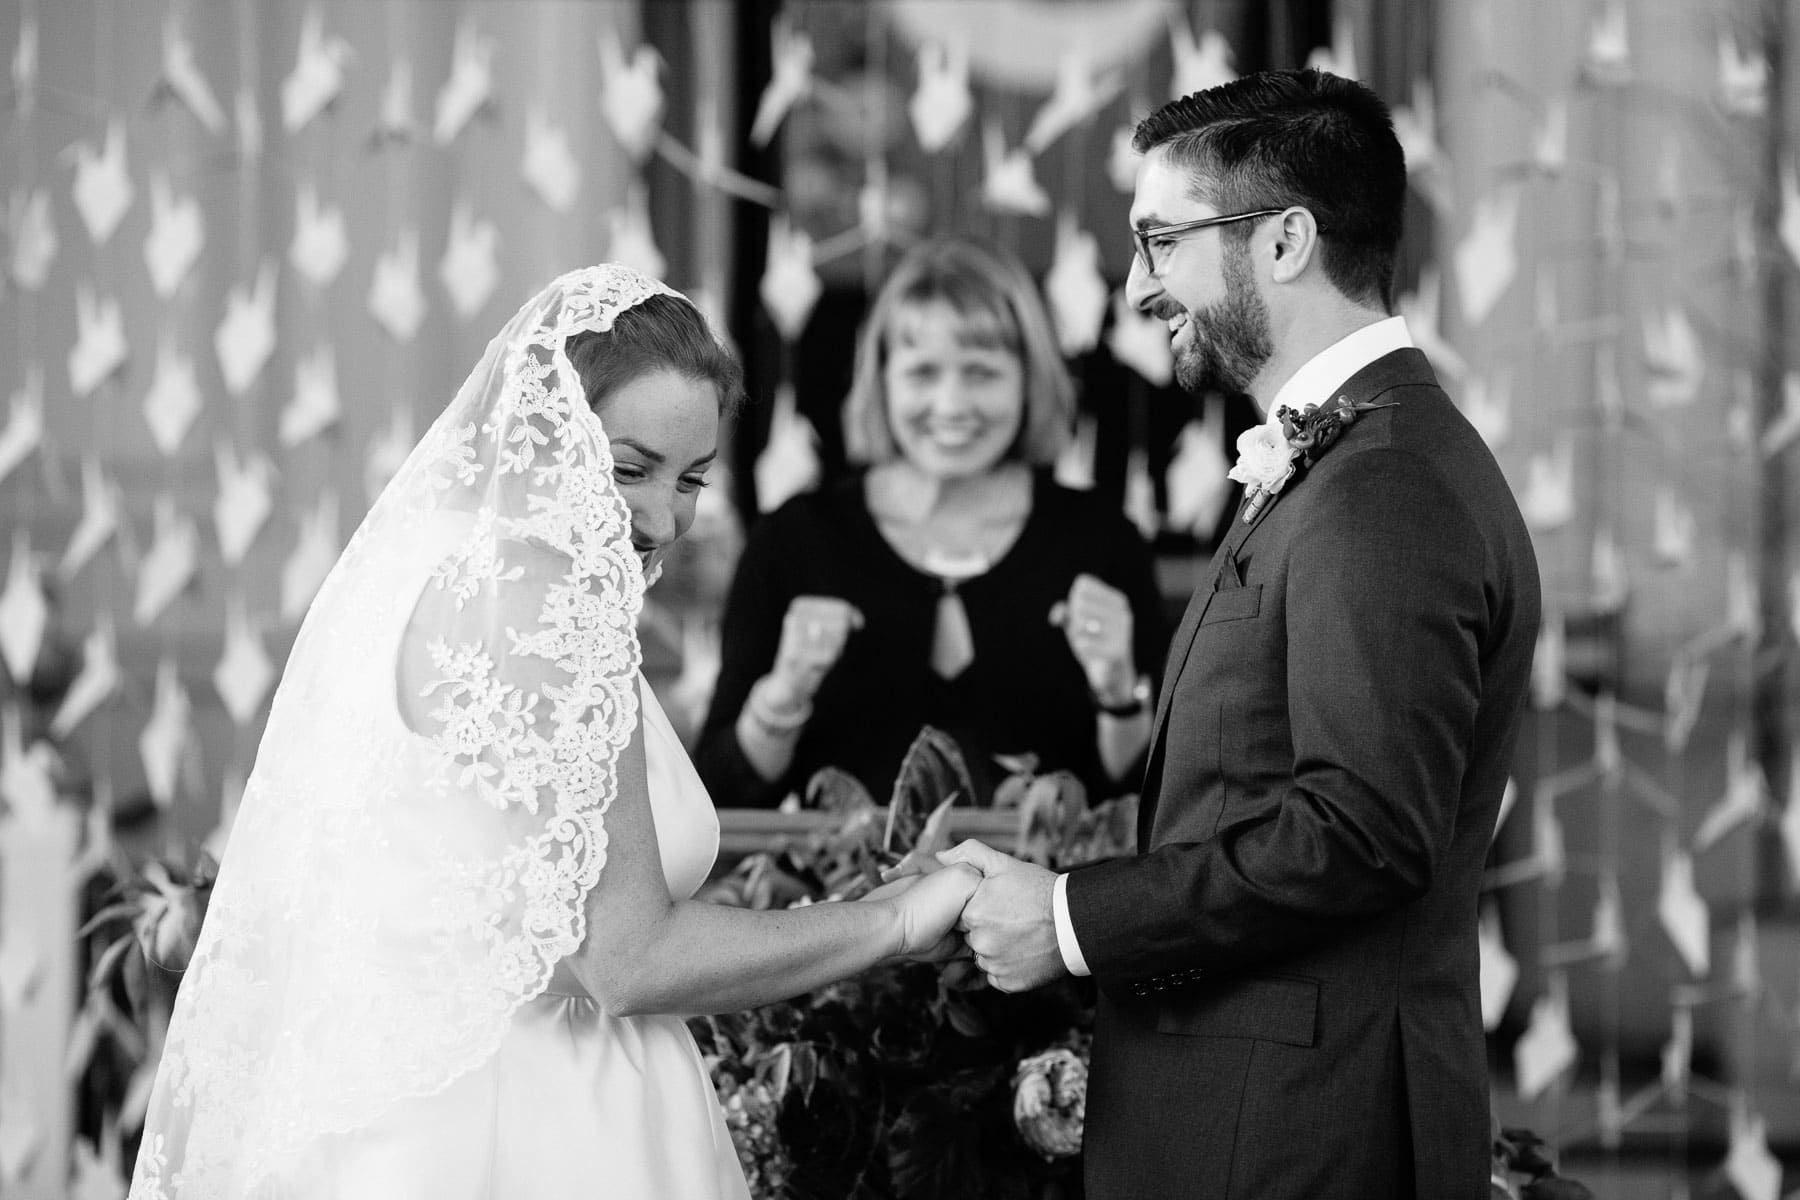 Kristina and Joe's Hope Central wedding in Jamaica Plain | Kelly Benvenuto Photography | Boston Wedding Photographer